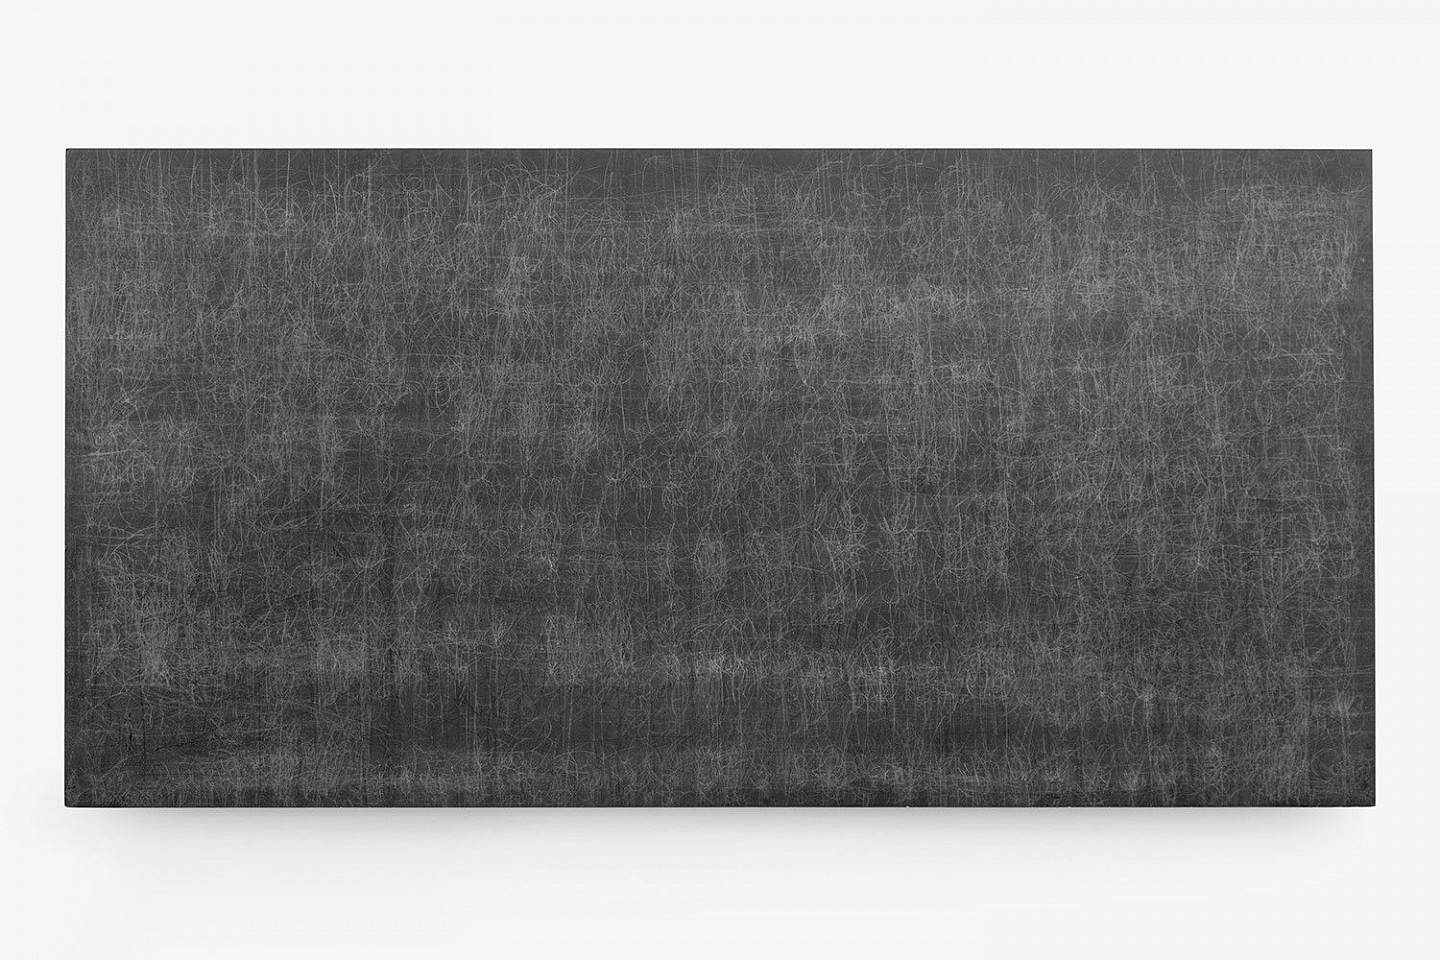 Kysa Johnson, Blow Up 3 - subatomic decay patterns in human time 11 x 15.36 minutes, 1997
erased chalk on blackboard, 49 x 96 in.
JOHK00005